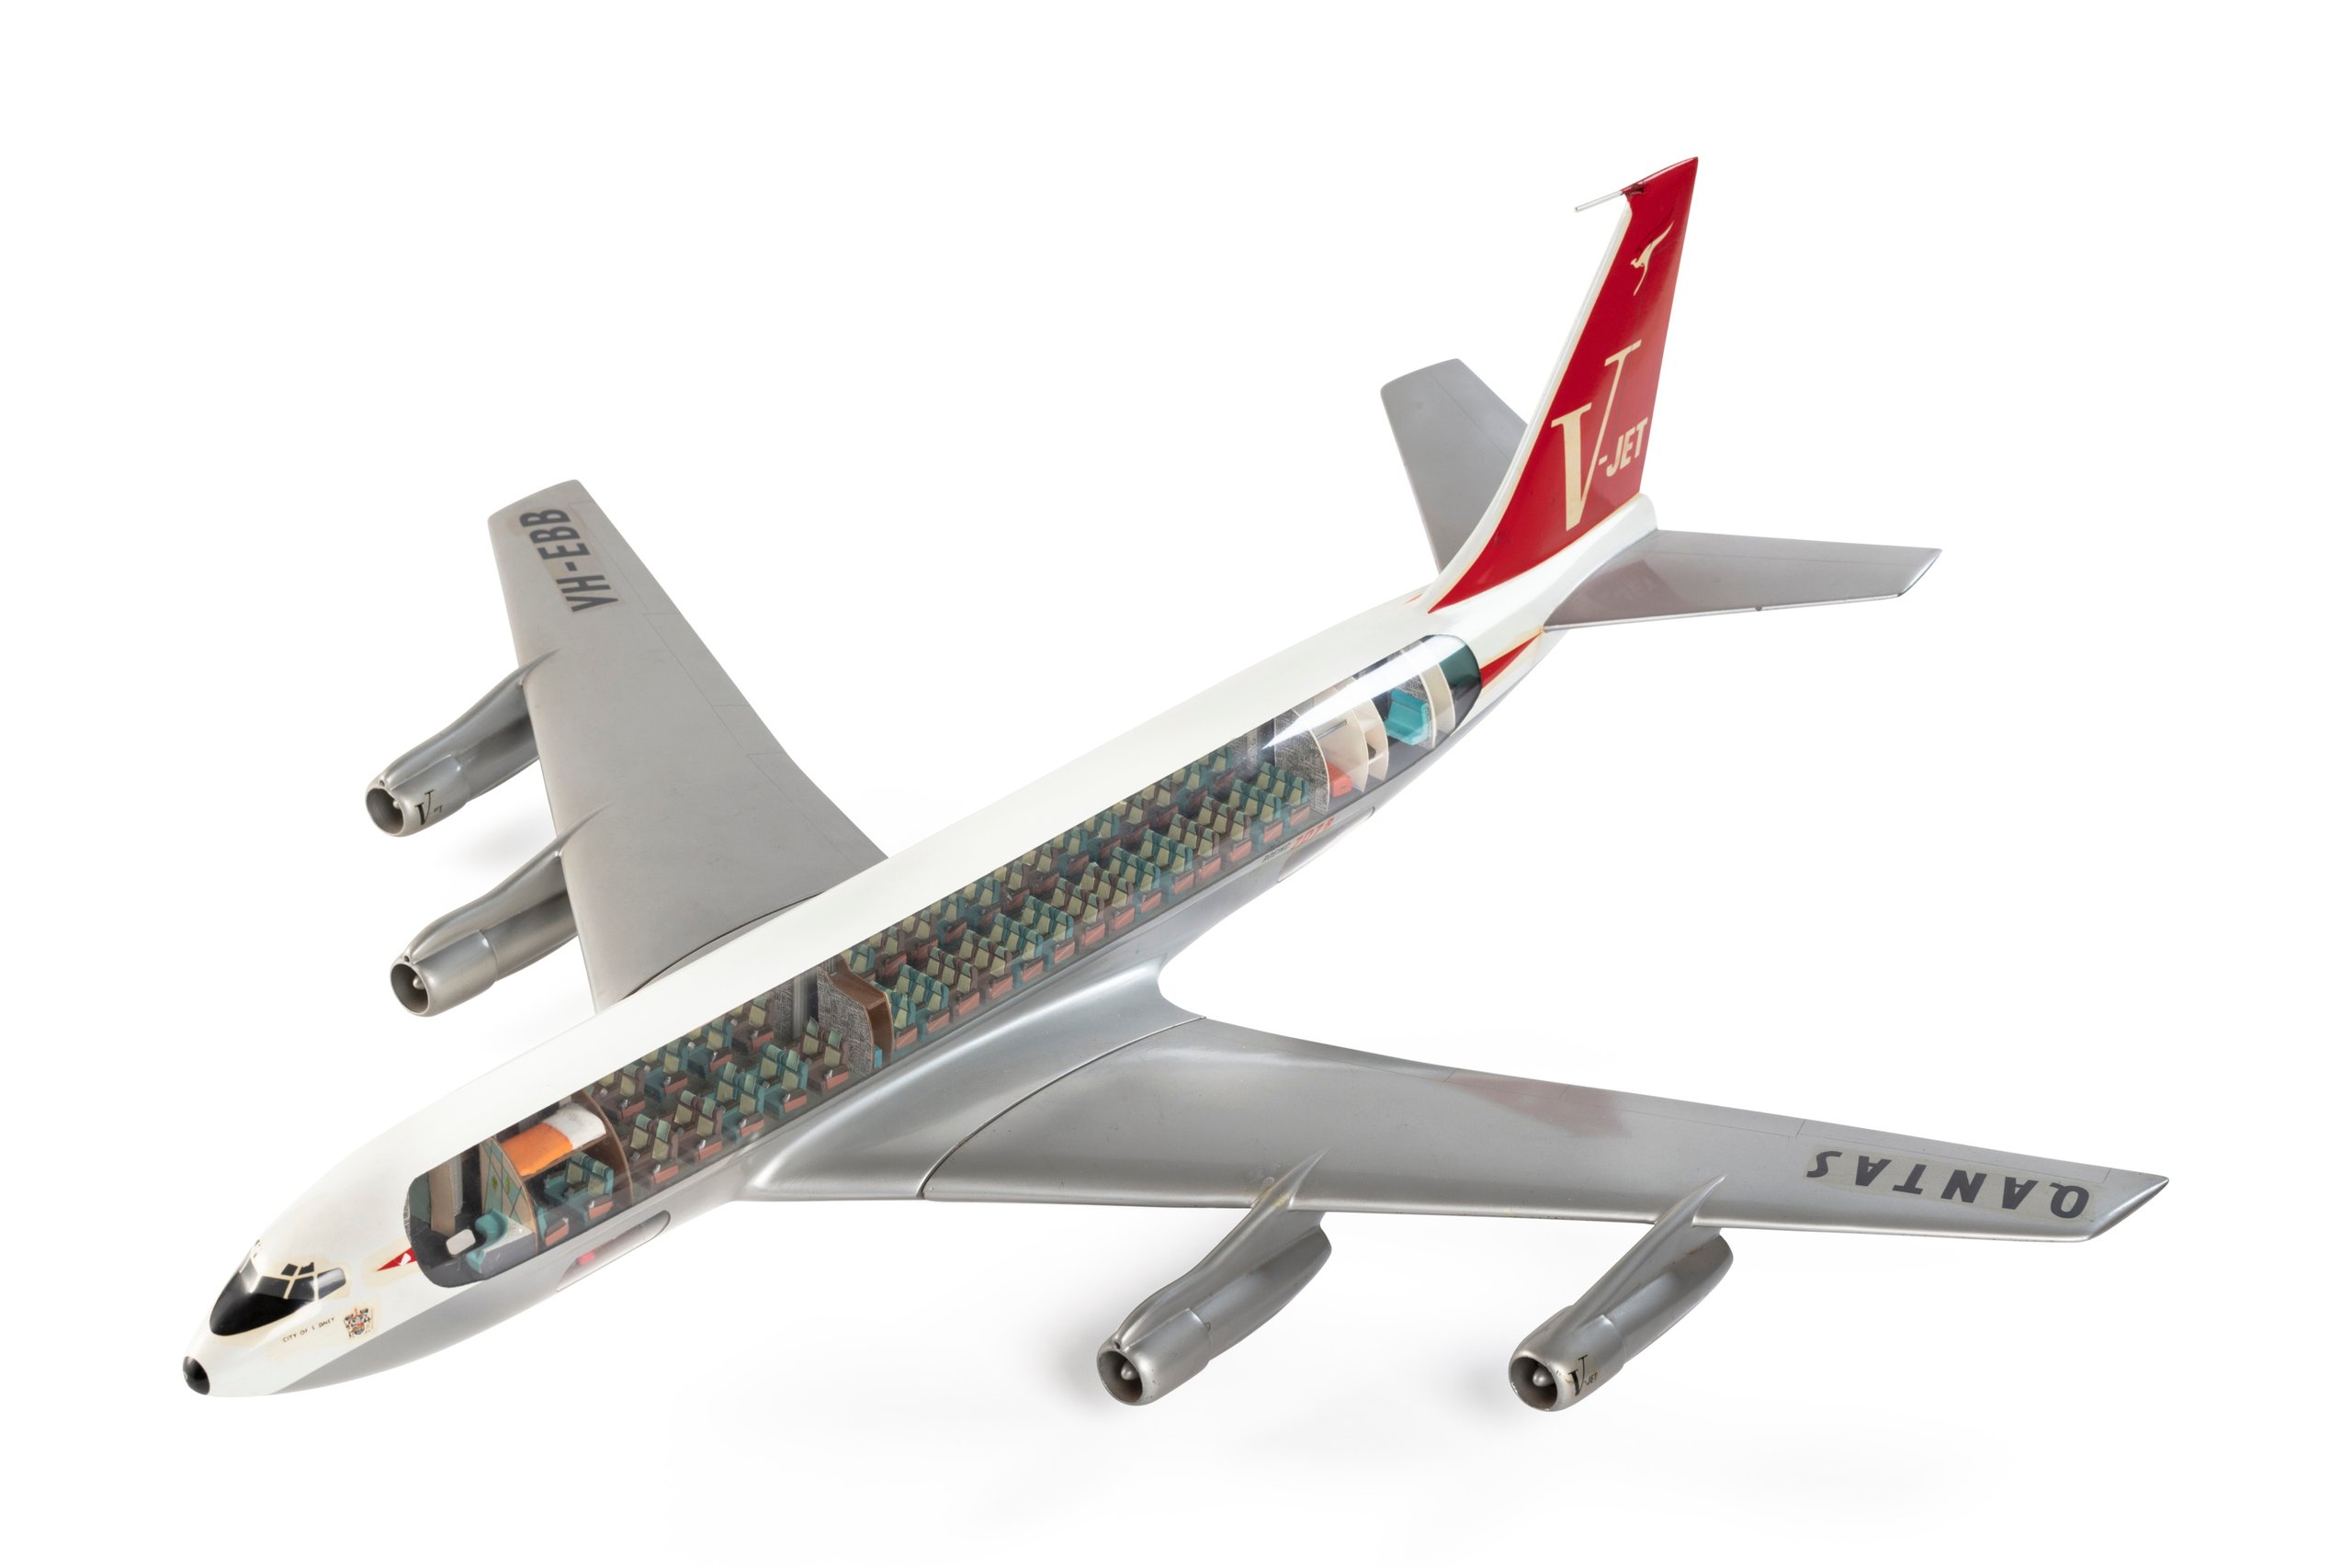 Model of 'City of Sydney' Qantas Boeing 707 aircraft